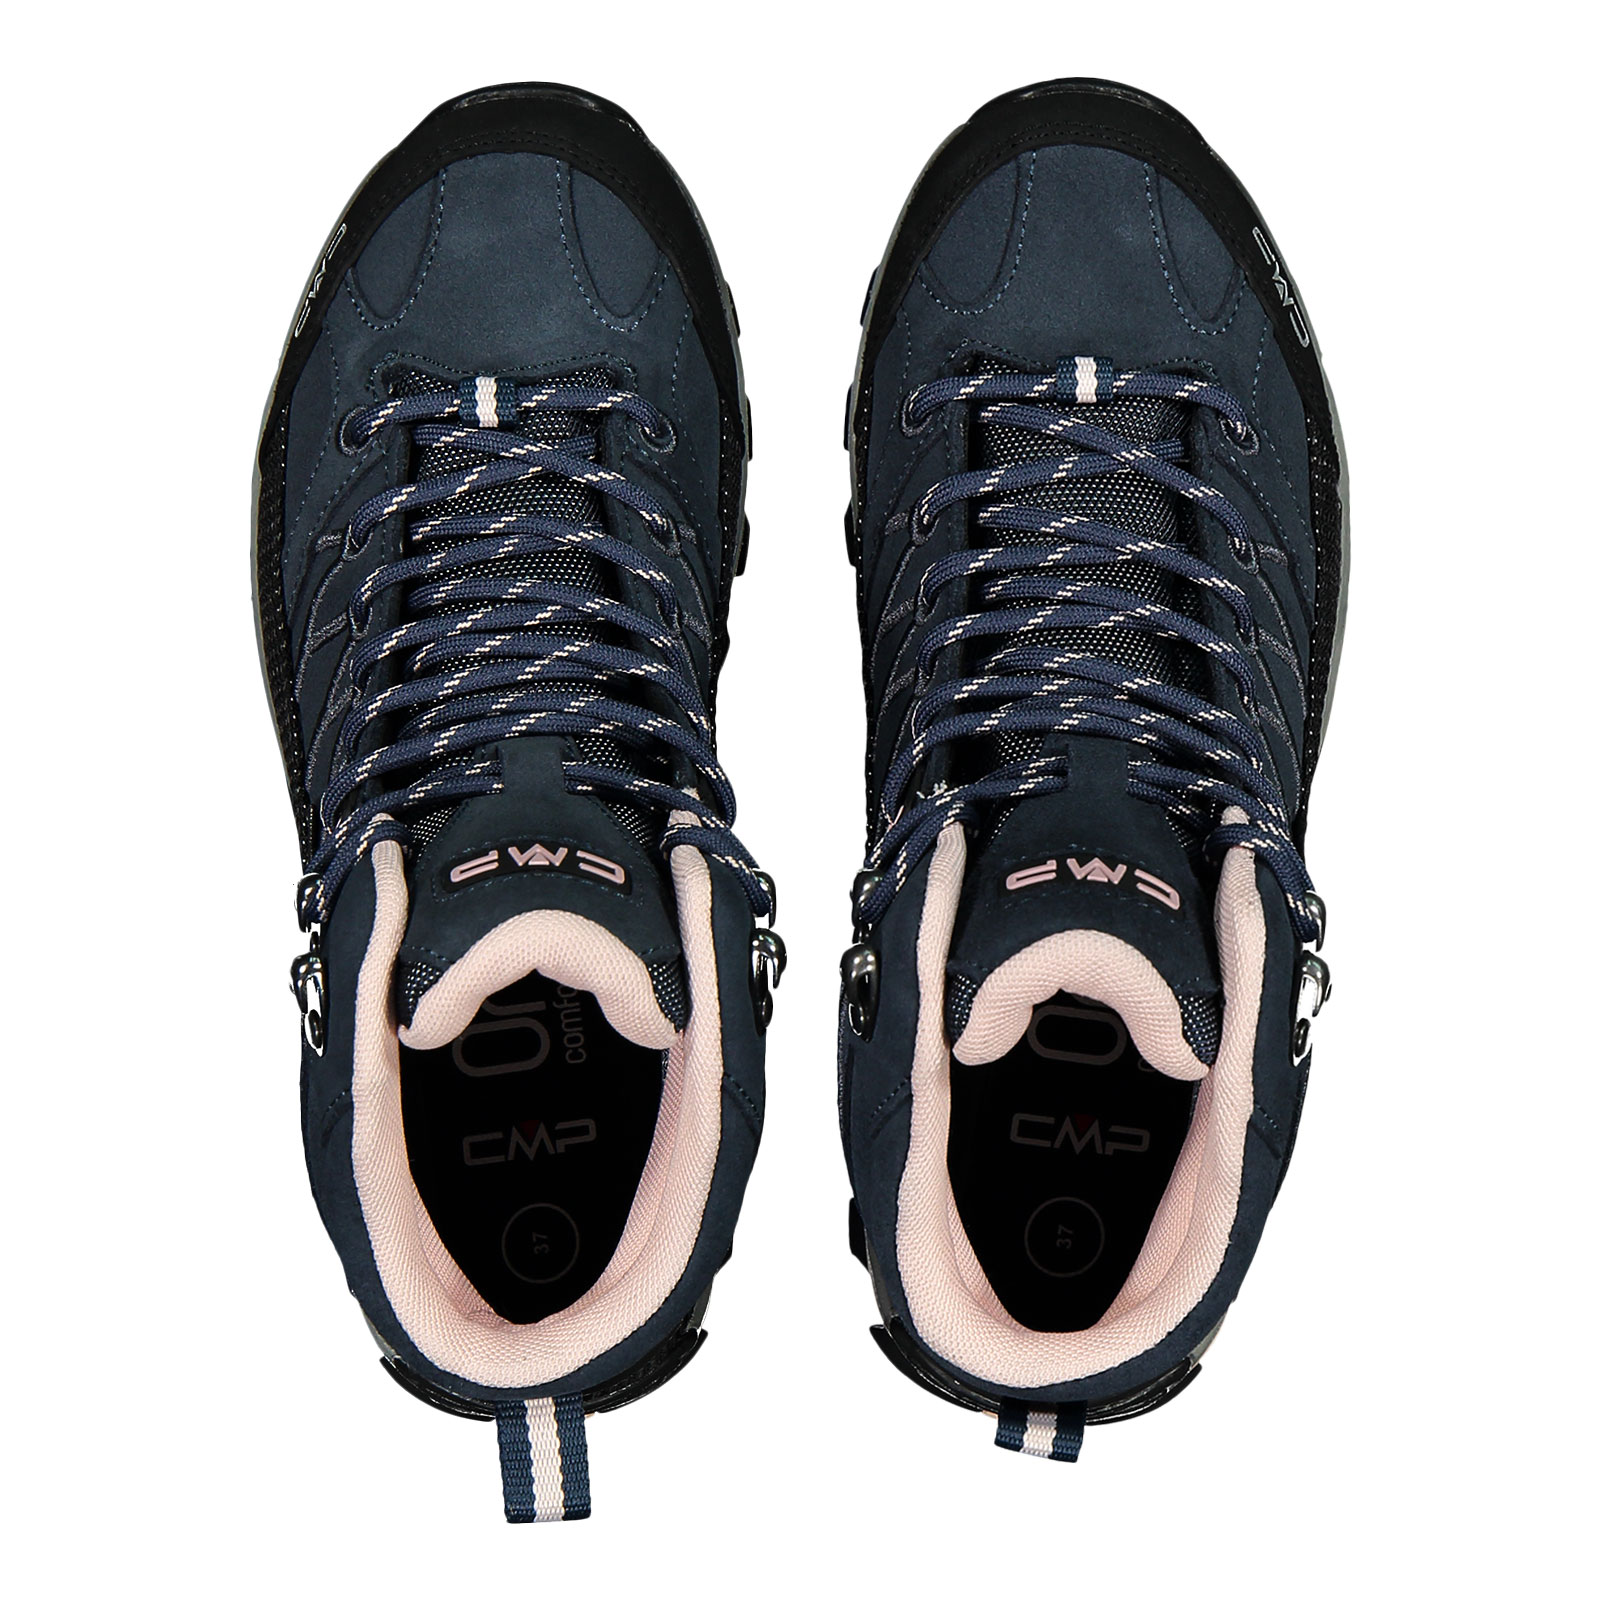 CMP Wanderschuhe Rigel MID Shoes Waterproof | Bonvenon Webshop